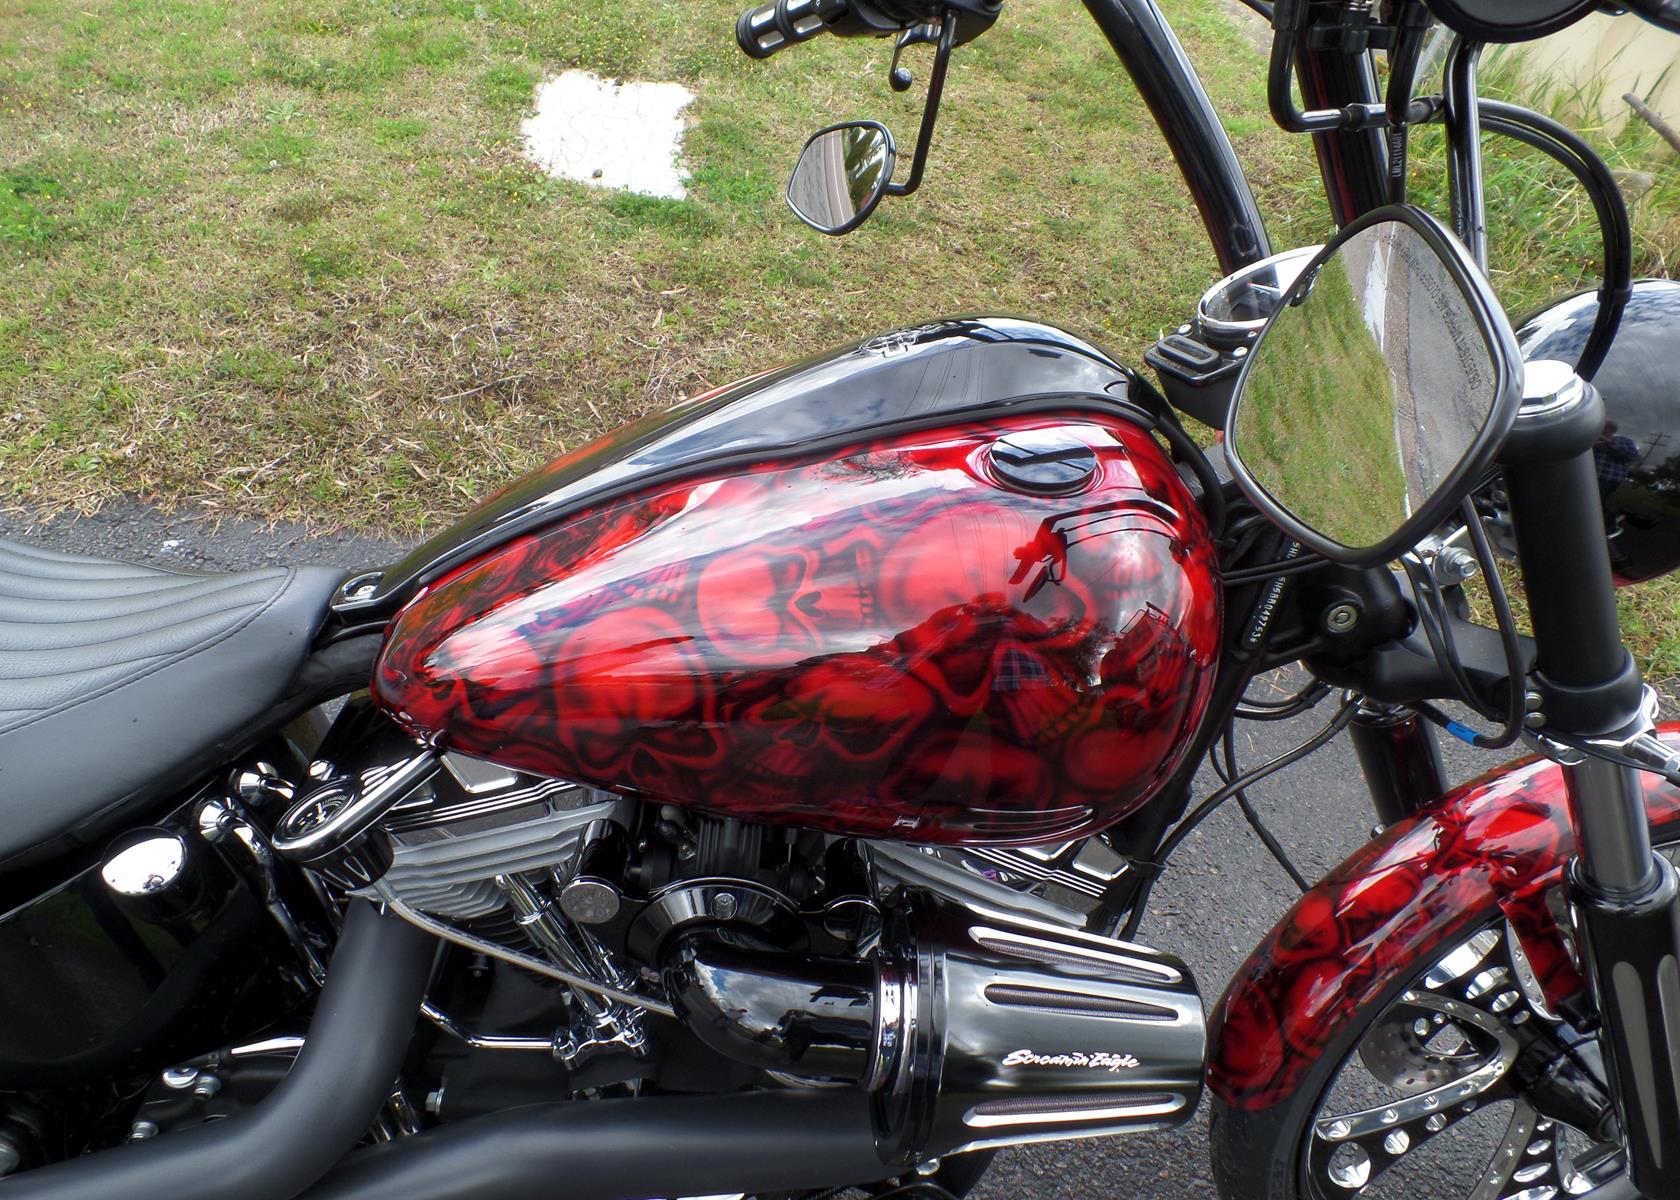 Custom airbrushed Harley Davidson